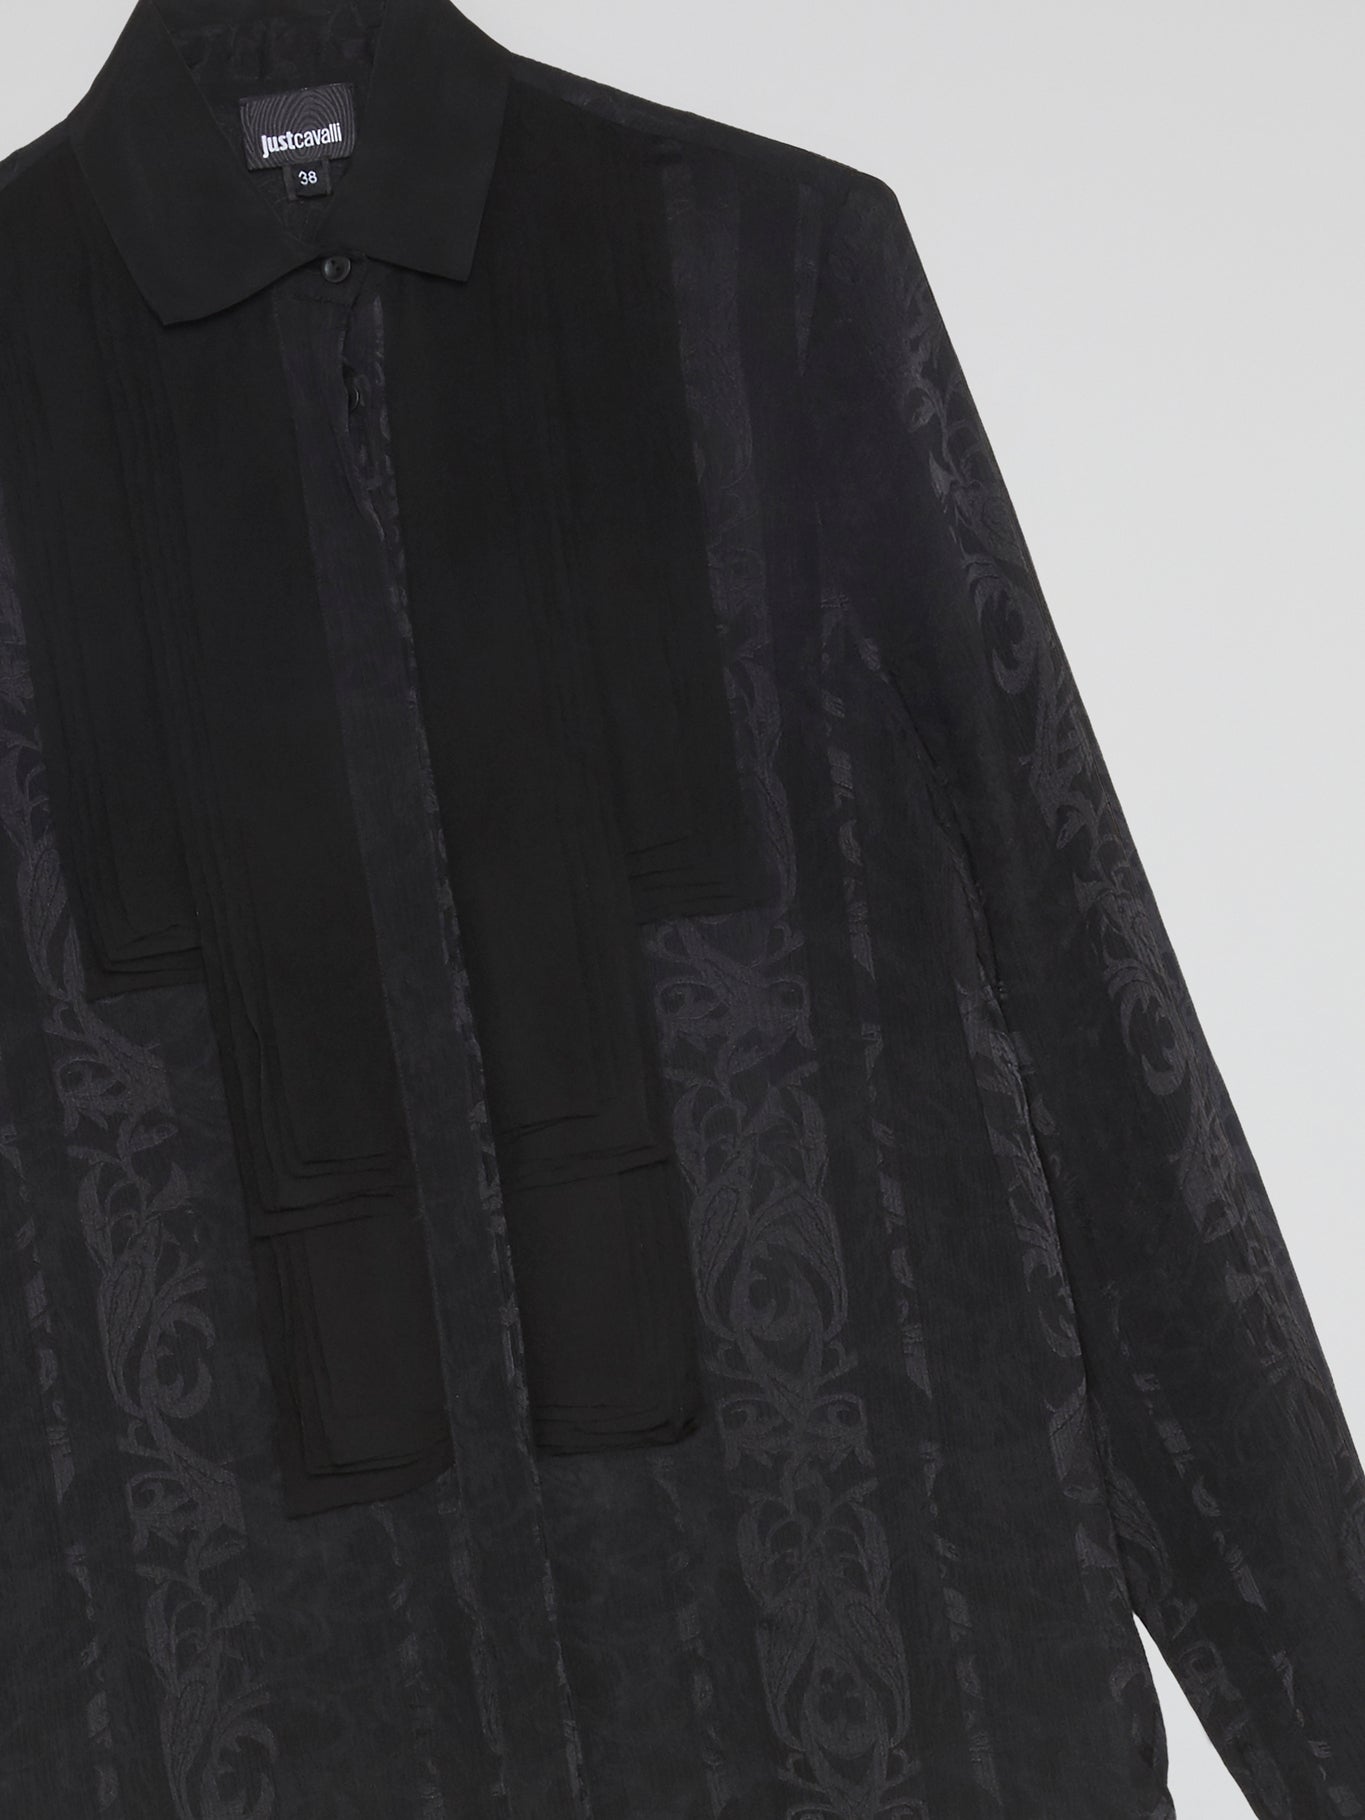 Black Printed Dress Shirt